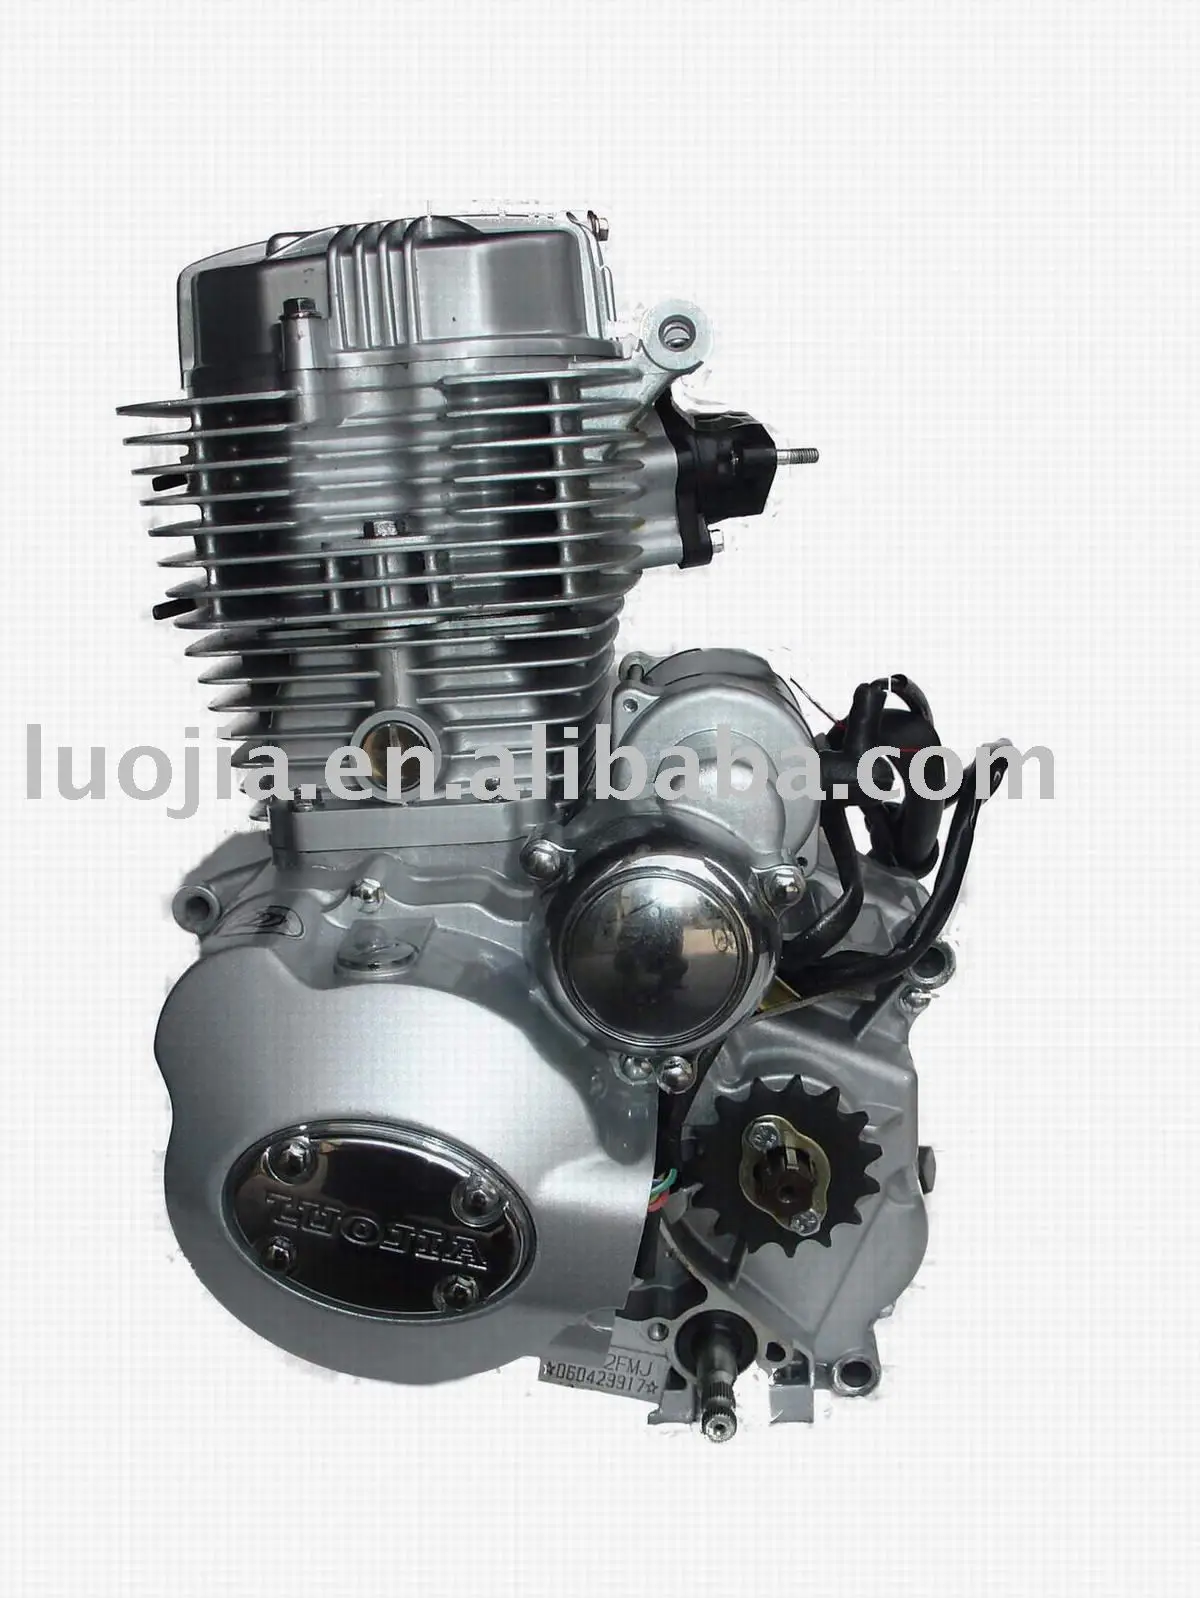 125cc 4 stroke engine